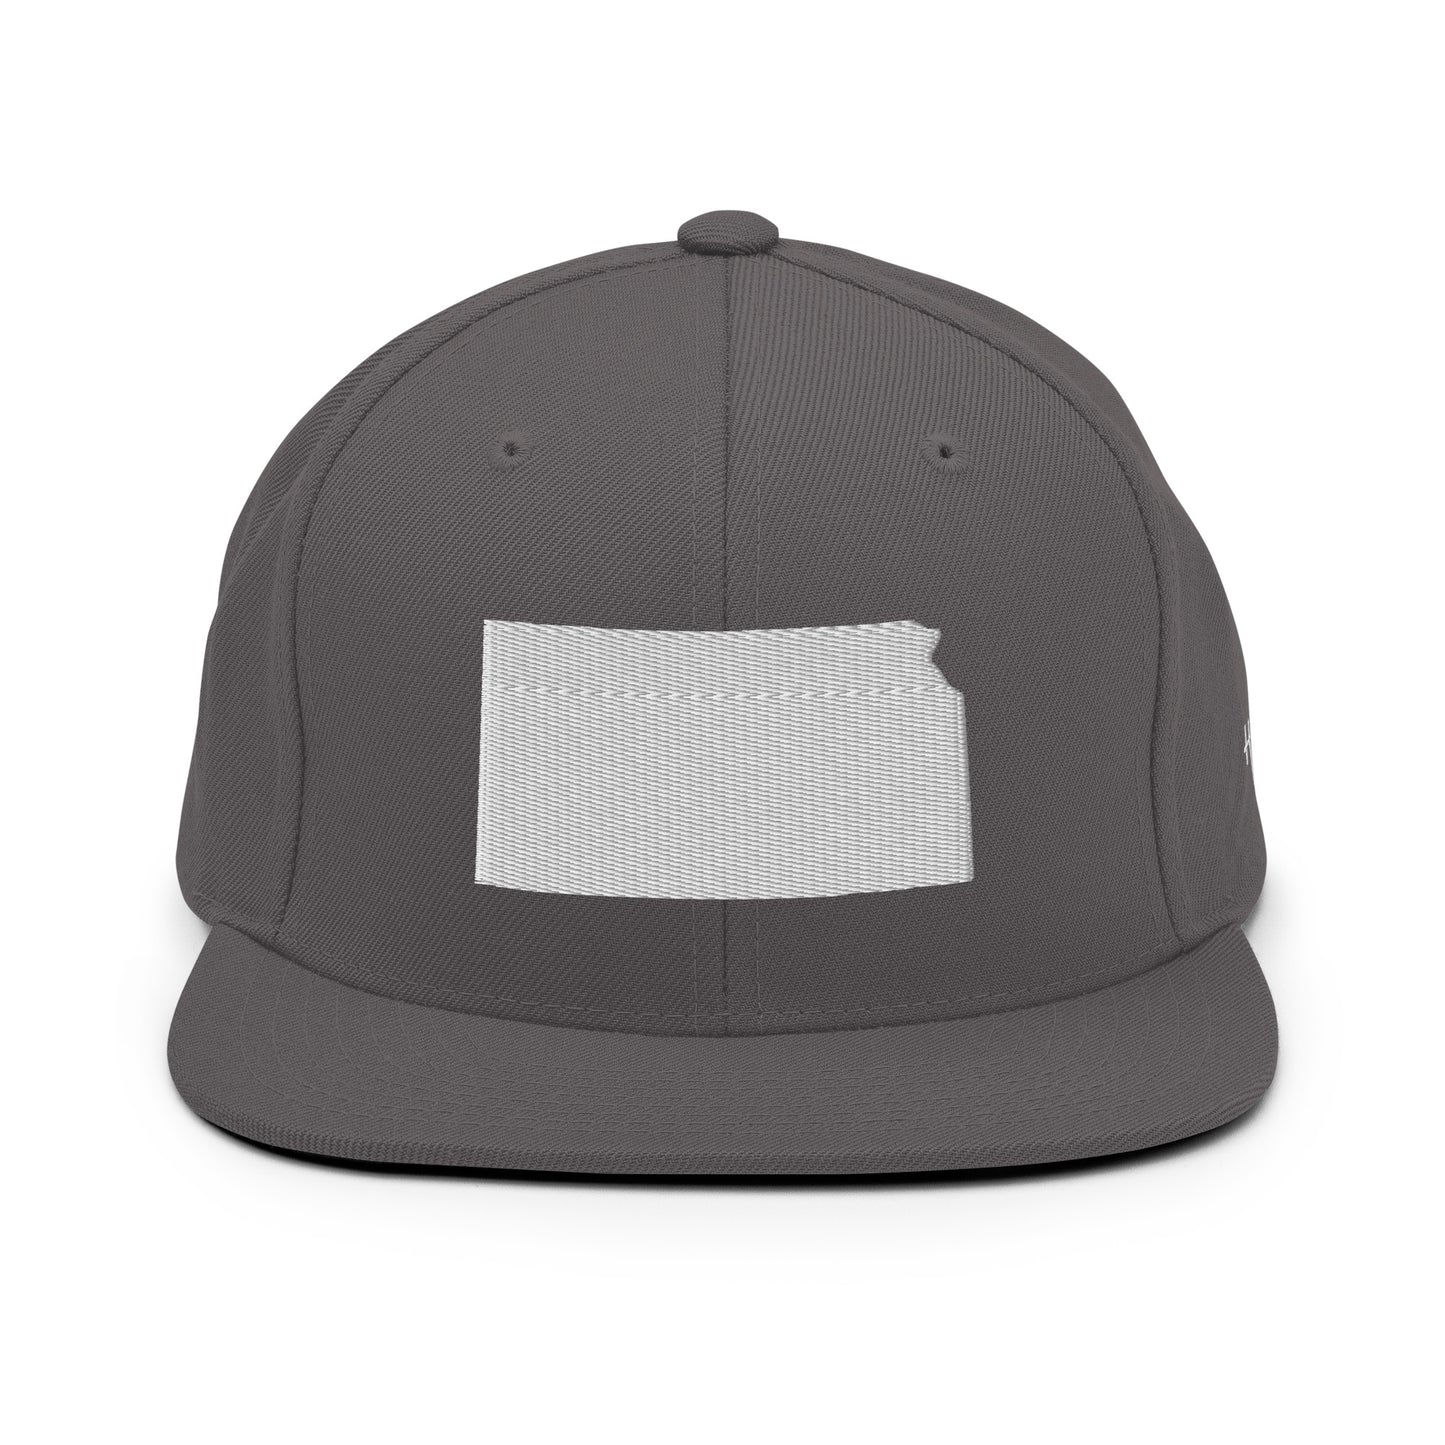 Kansas State Silhouette 6 Panel Snapback Hat